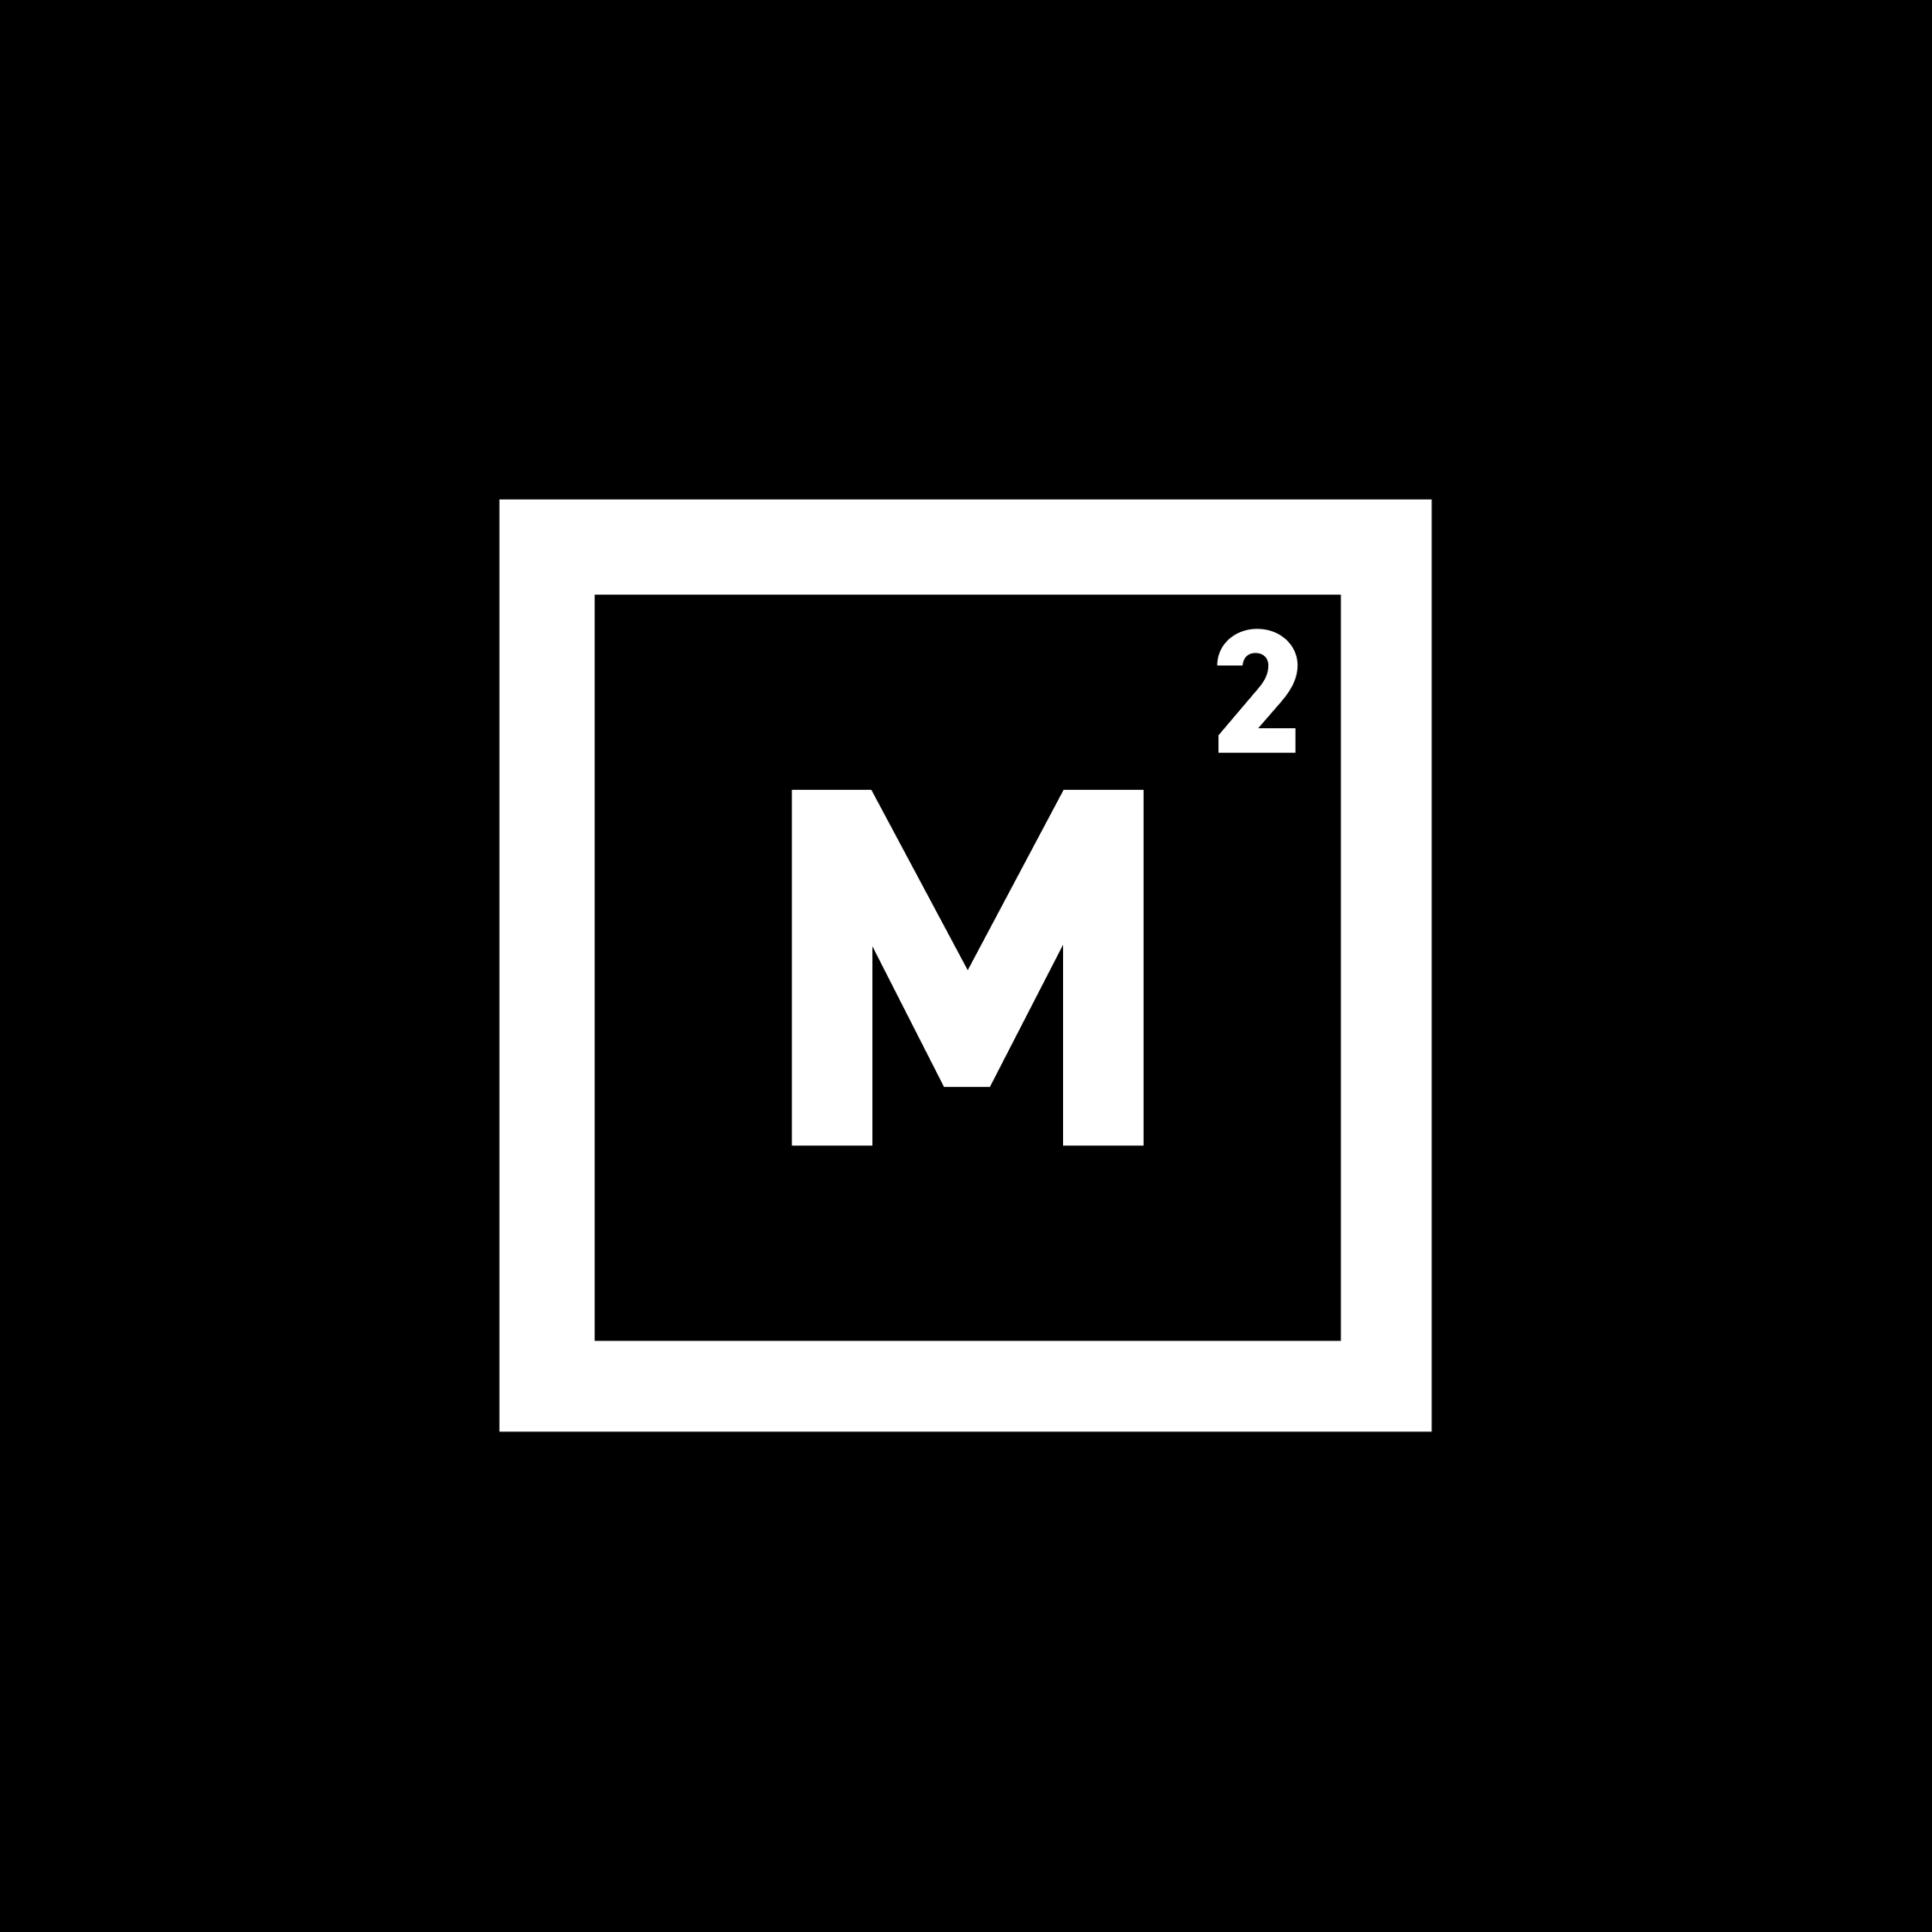 20220429 M2 logo on black